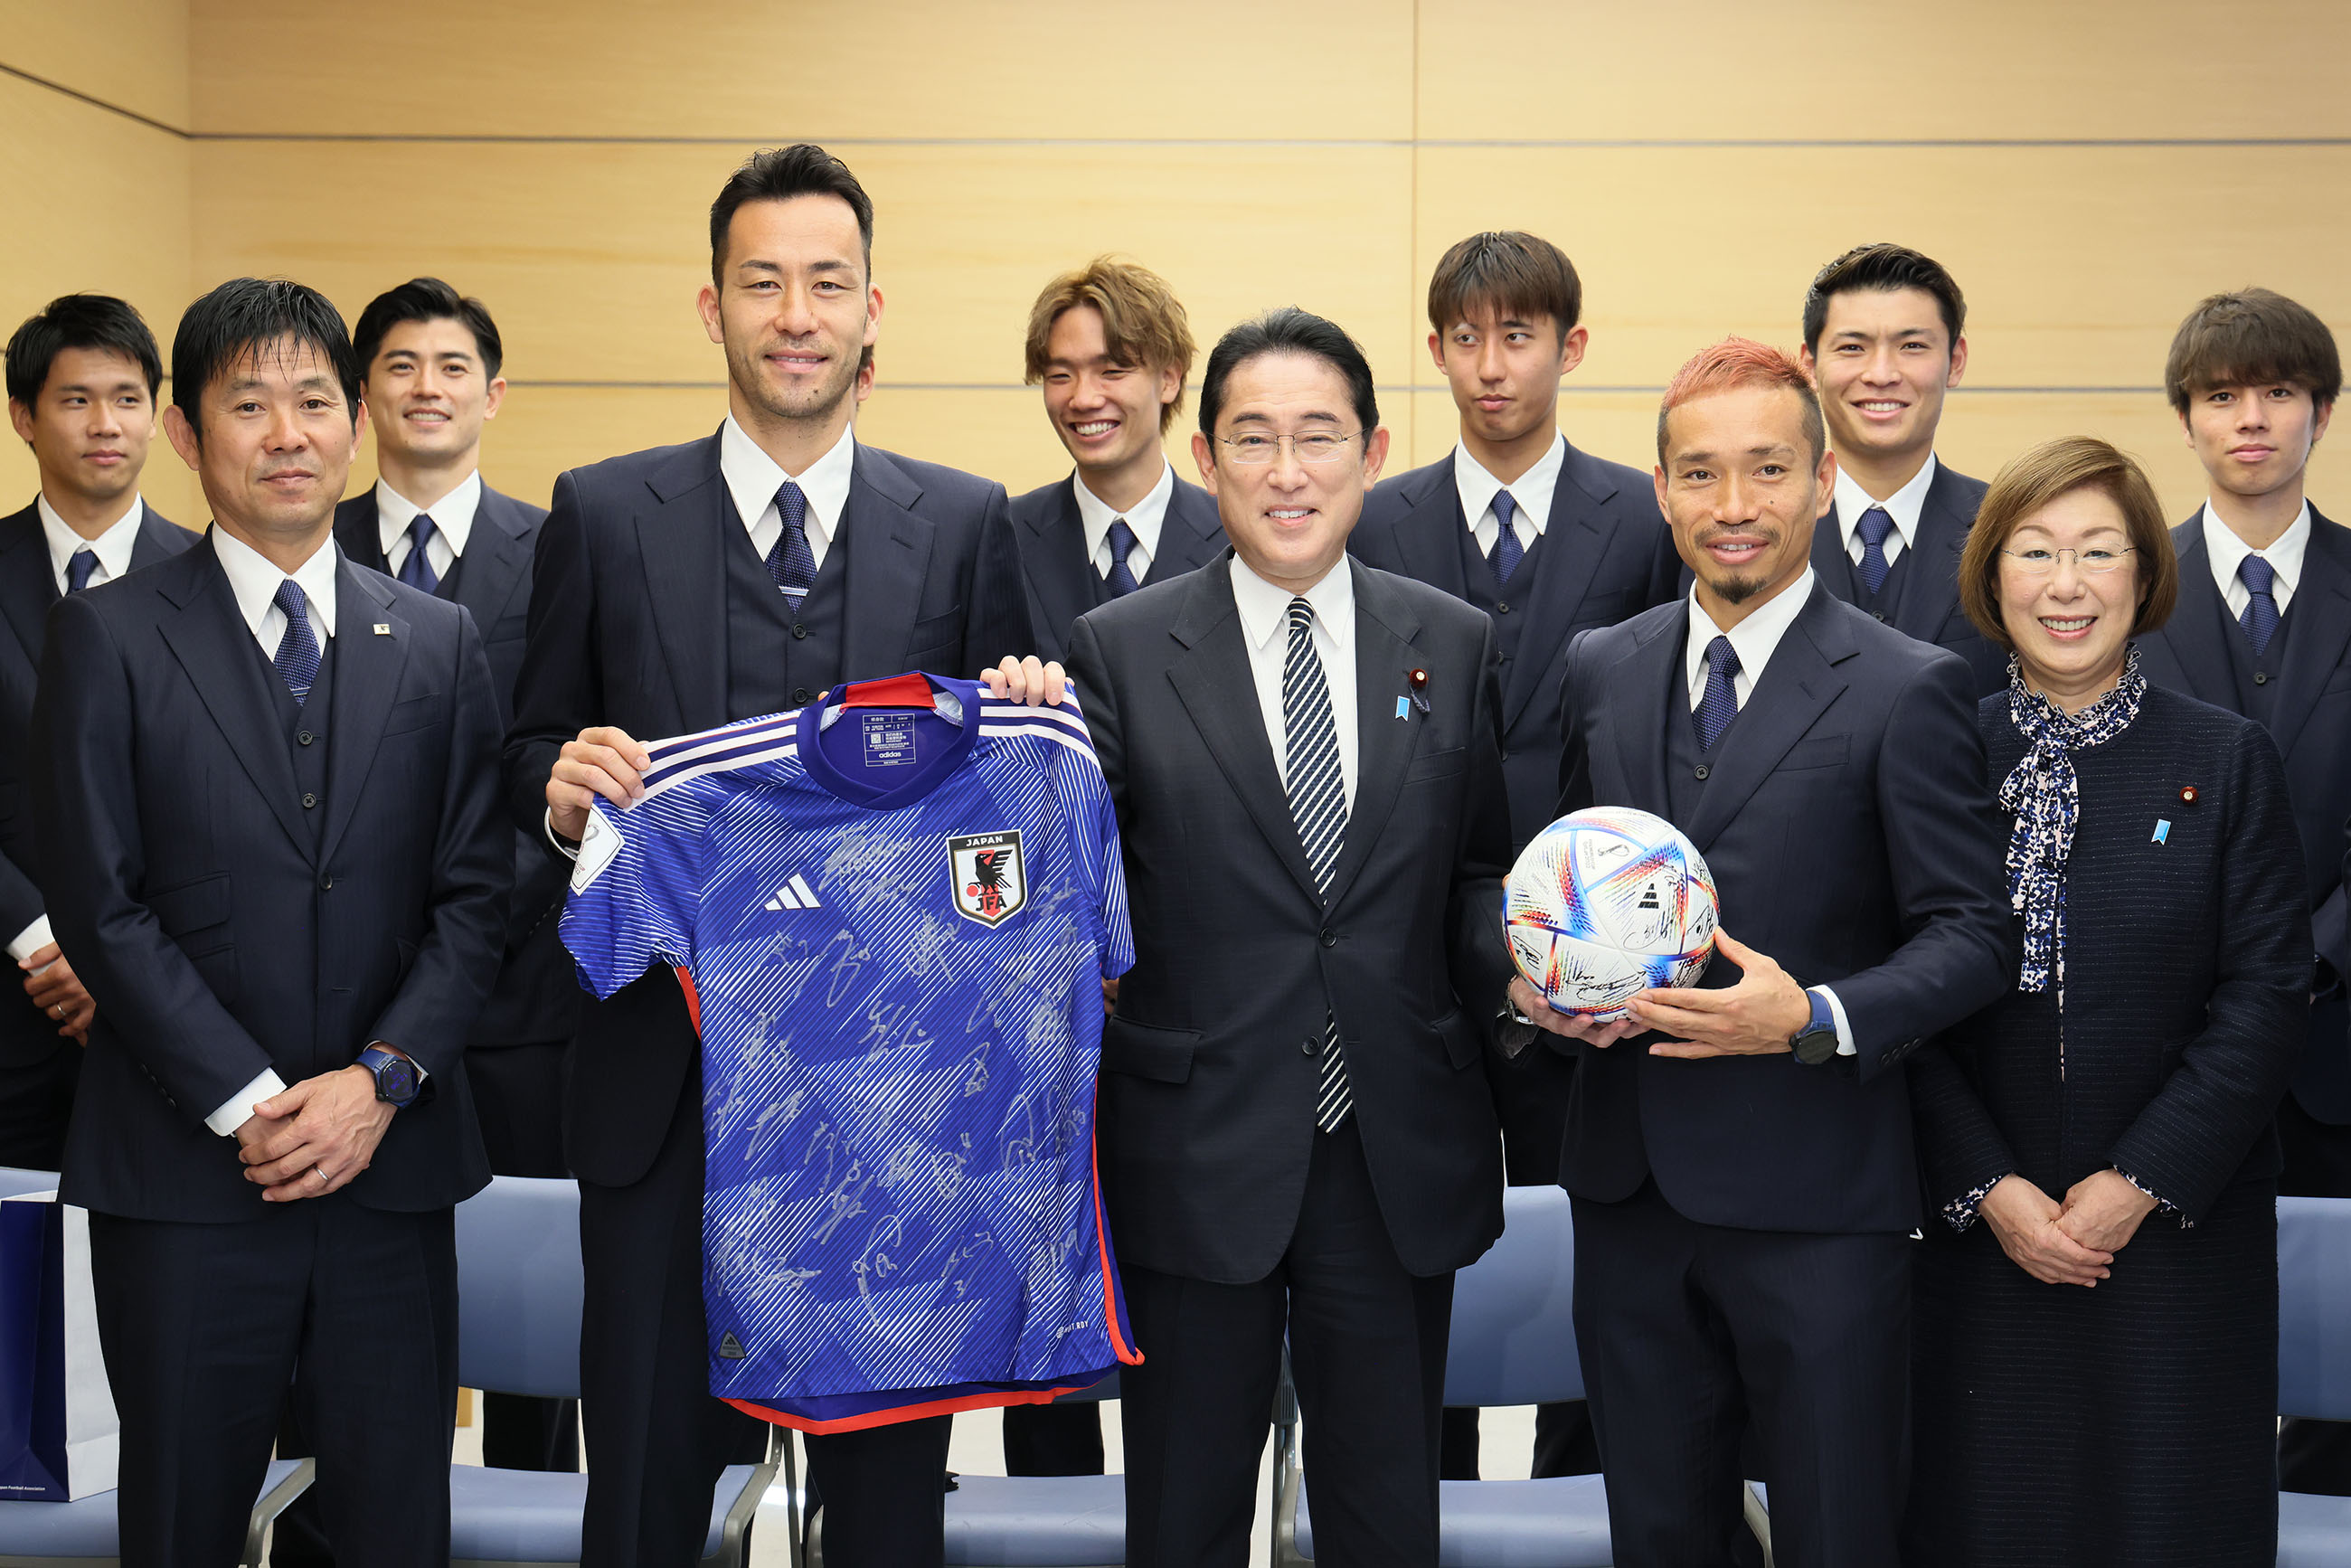 Courtesy Call from the Samurai Blue (Japan National Football Team) at the FIFA World Cup Qatar 2022